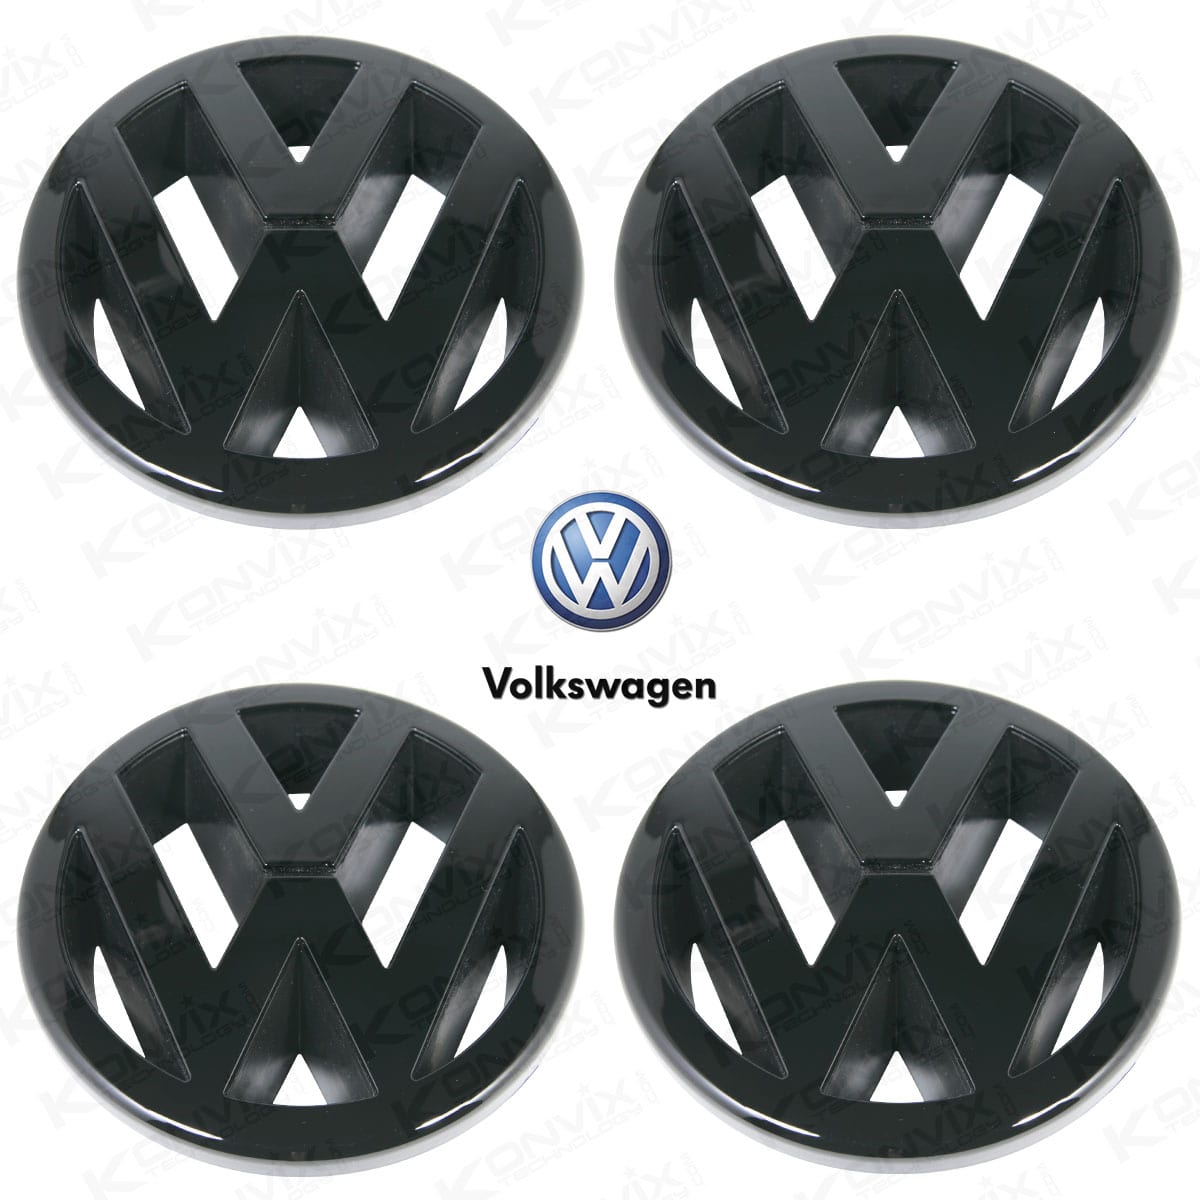 Emblème avant Volkswagen Golf 5 noir brillant 125 mm de diamètre